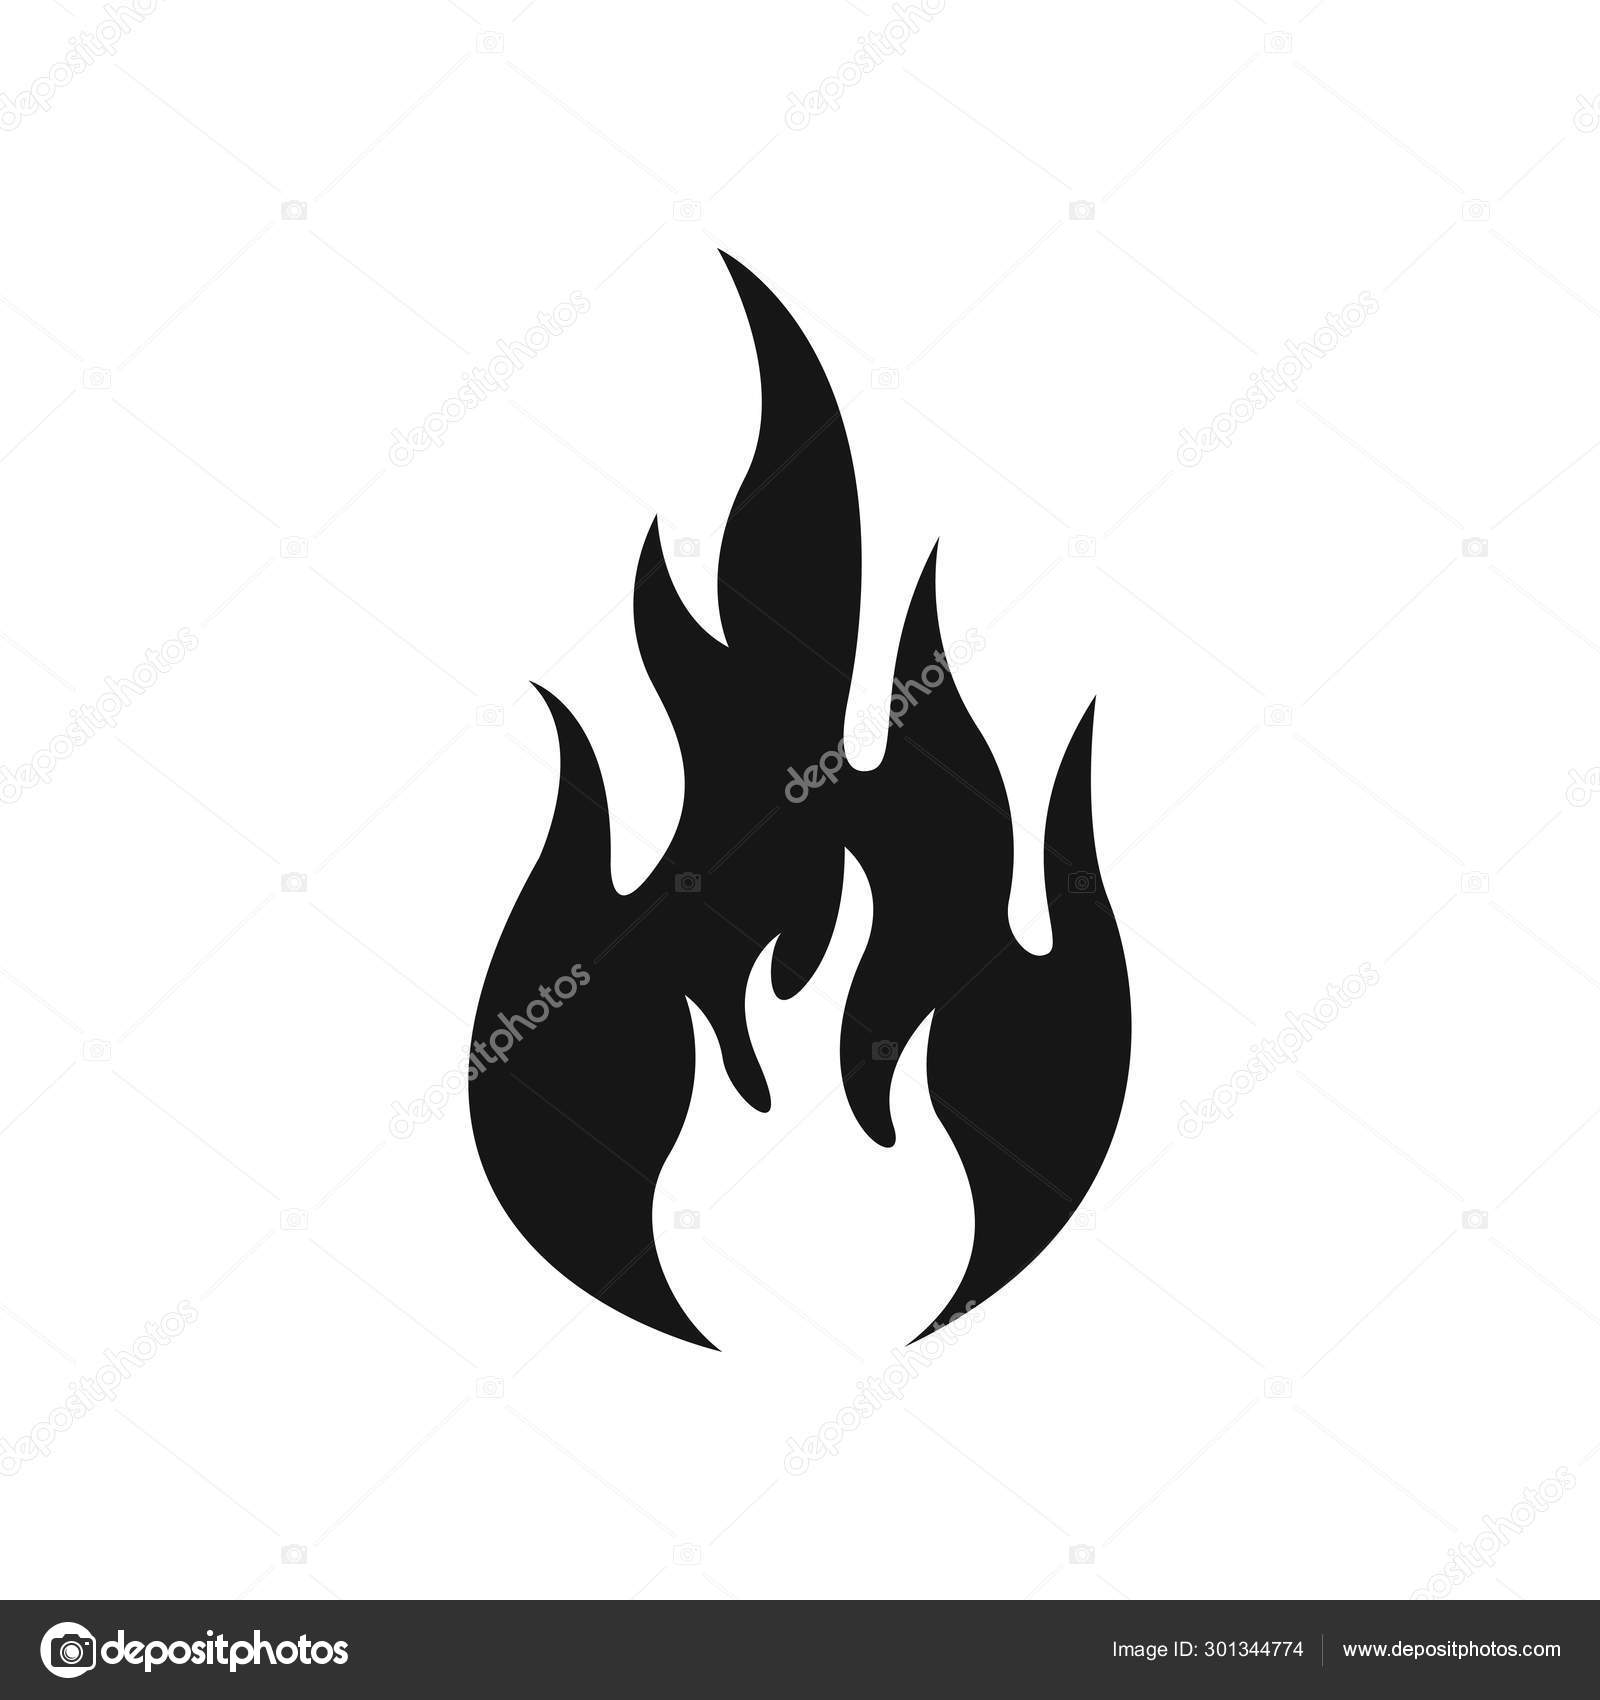 Conjunto de ícones de chama de fogo preto imagem vetorial de huhulin©  11098595